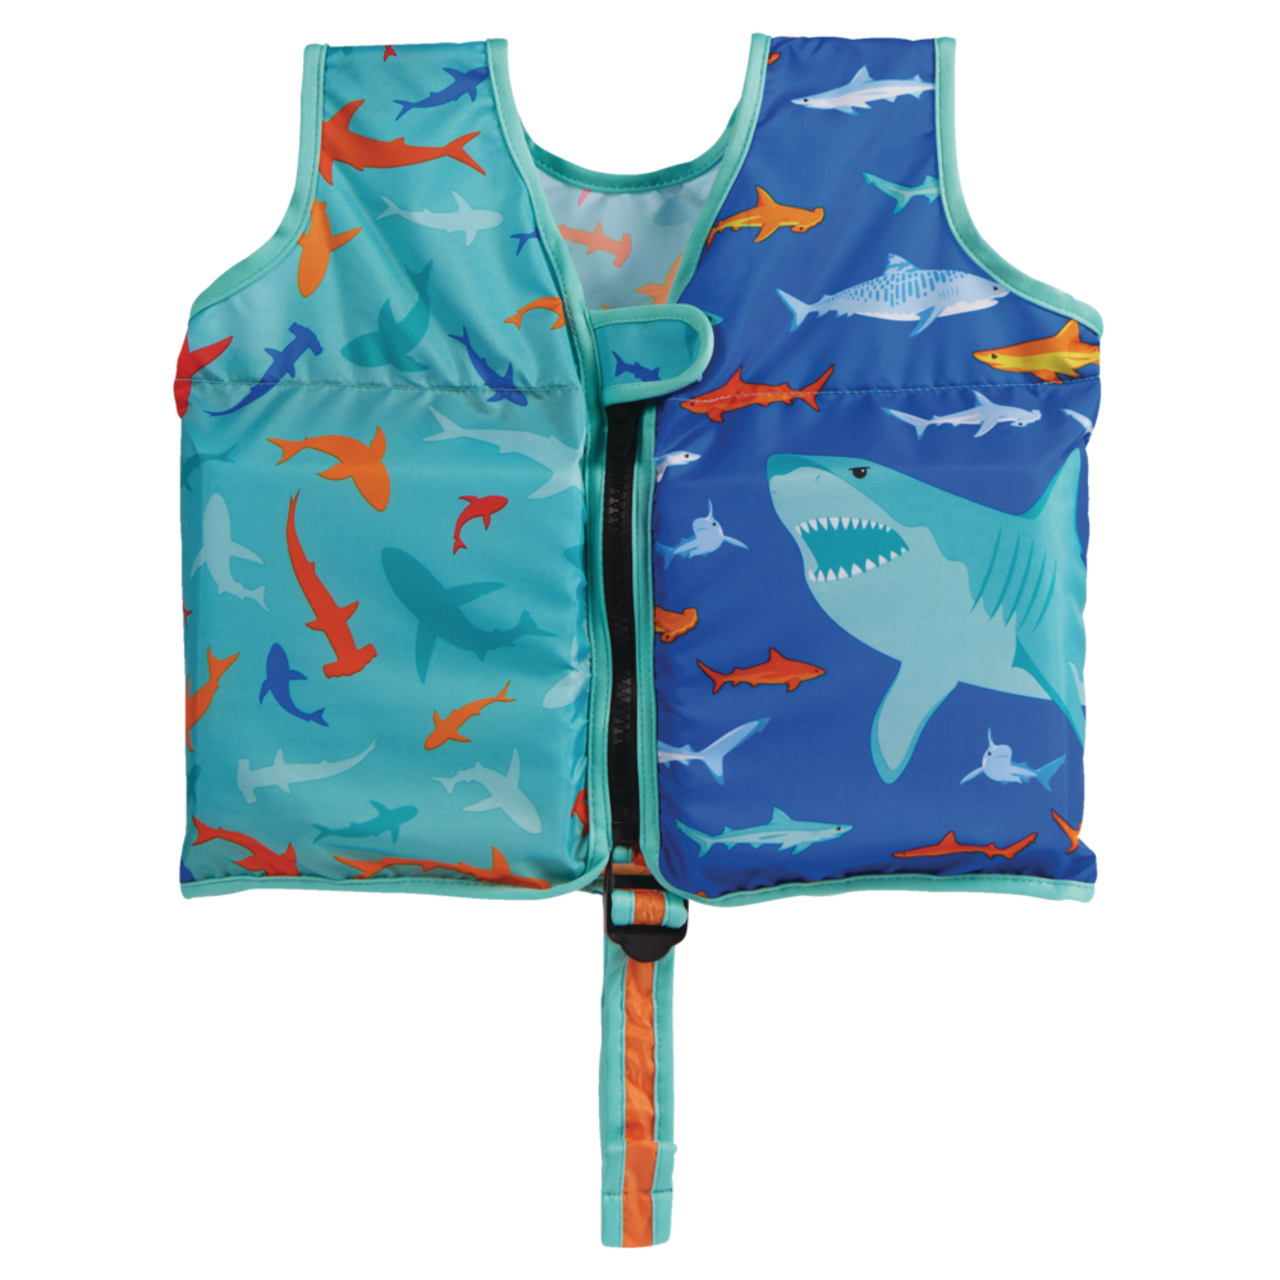 Swimways Kids' UPF 50+ Sun Protected Swim Vest, Shark Design, Ages 2+